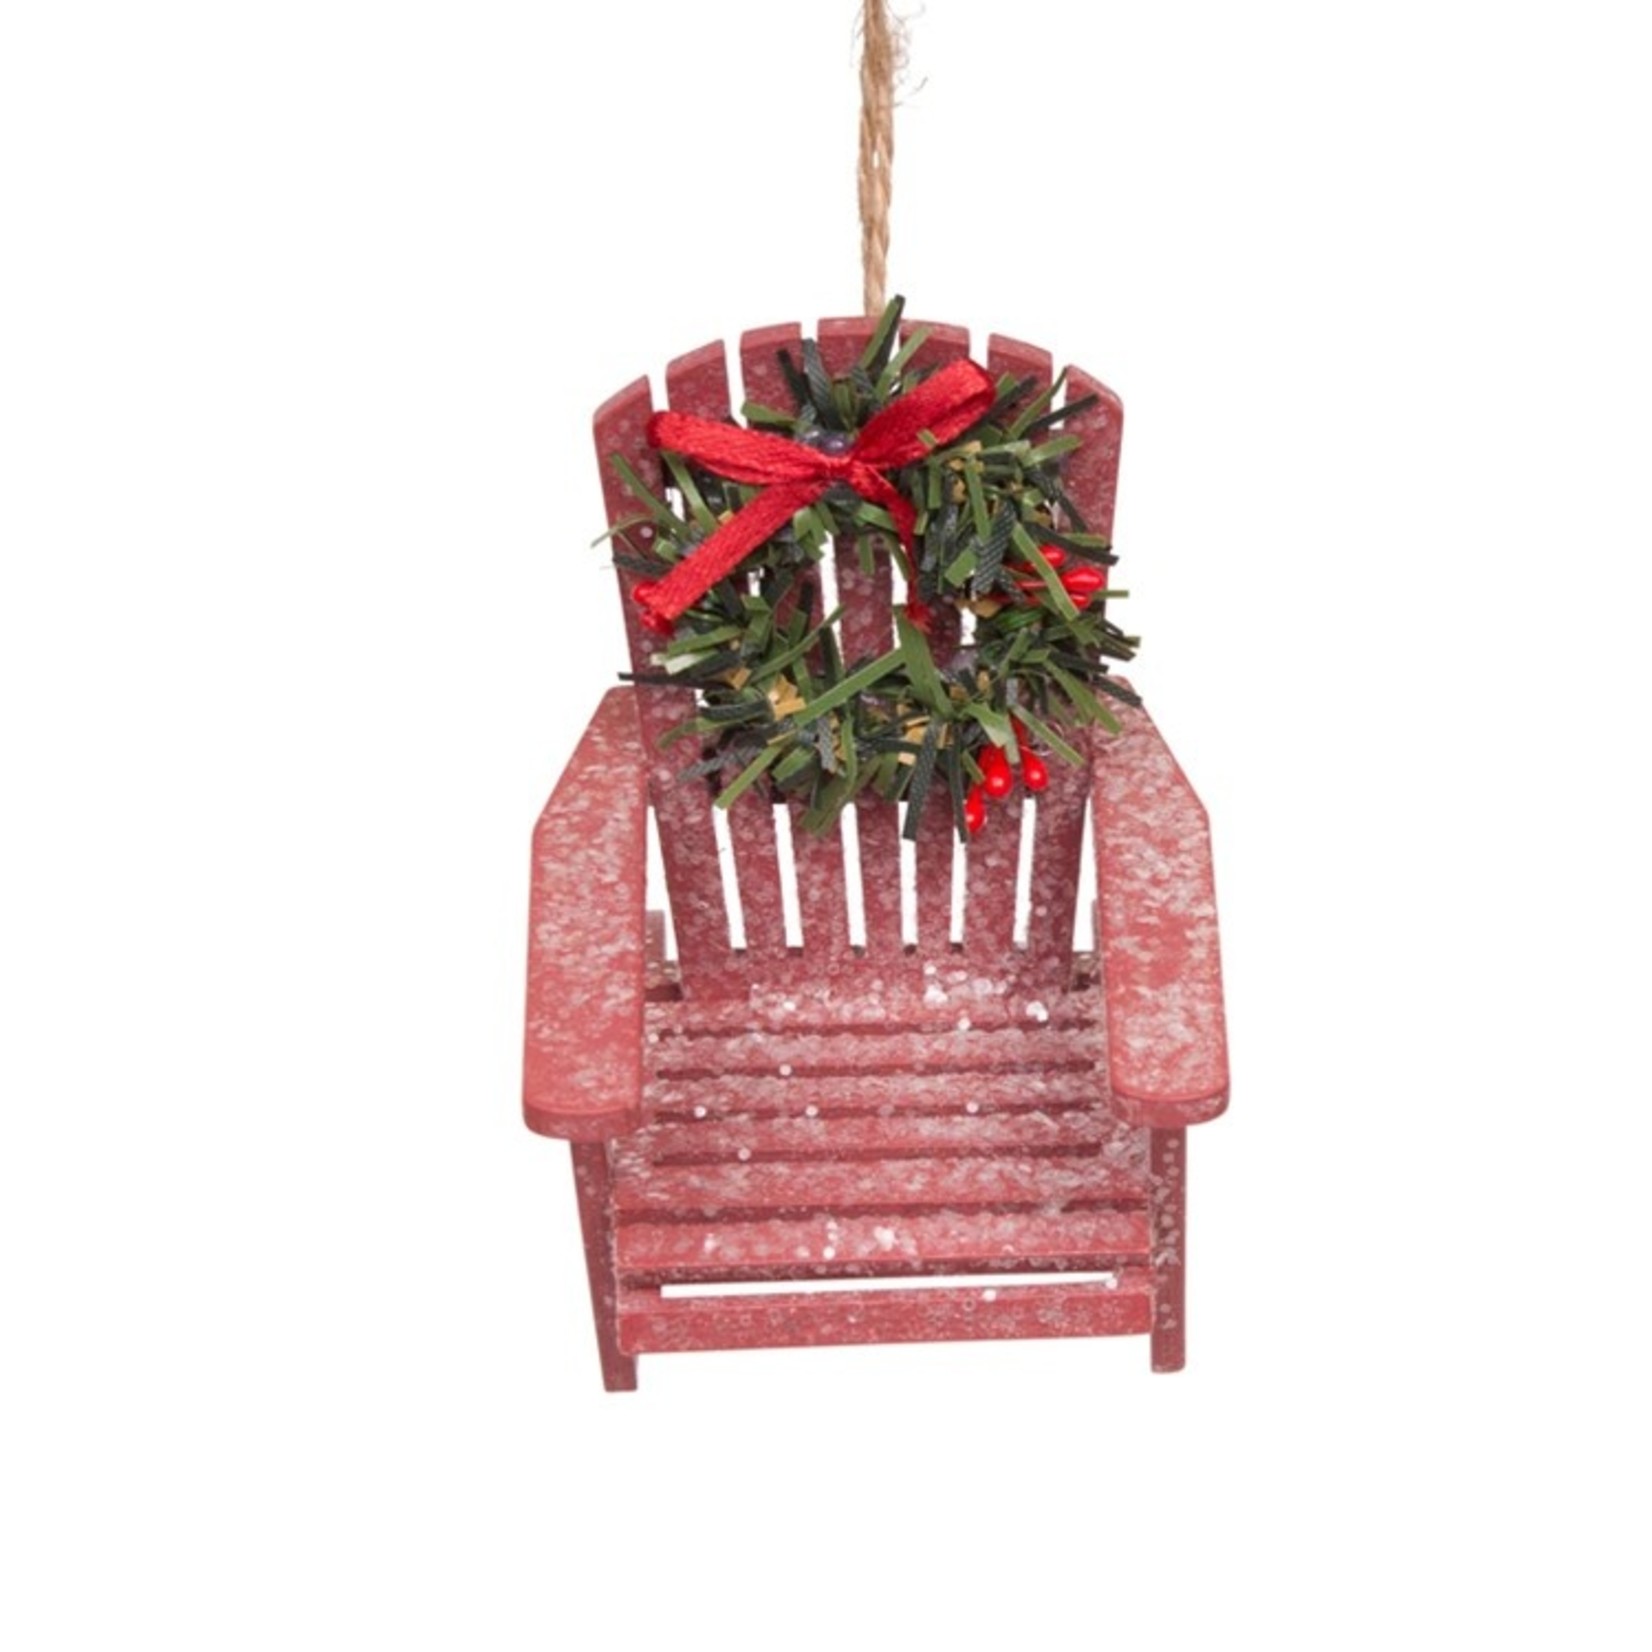 Muskoka Chair Ornament - Red